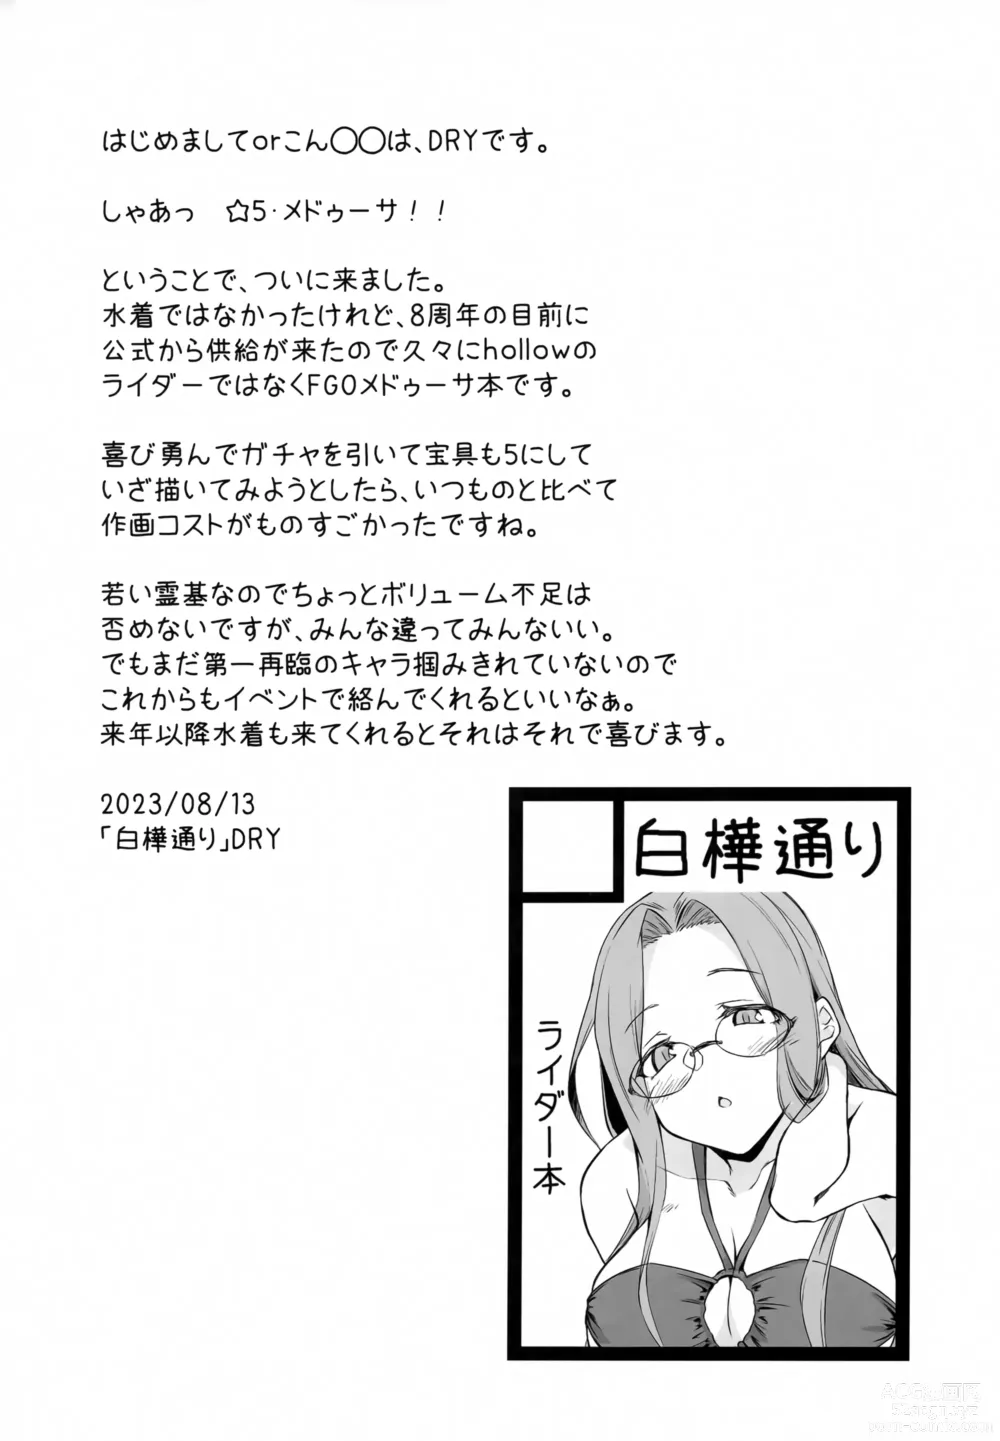 Page 3 of doujinshi Yoru no Double Medusa